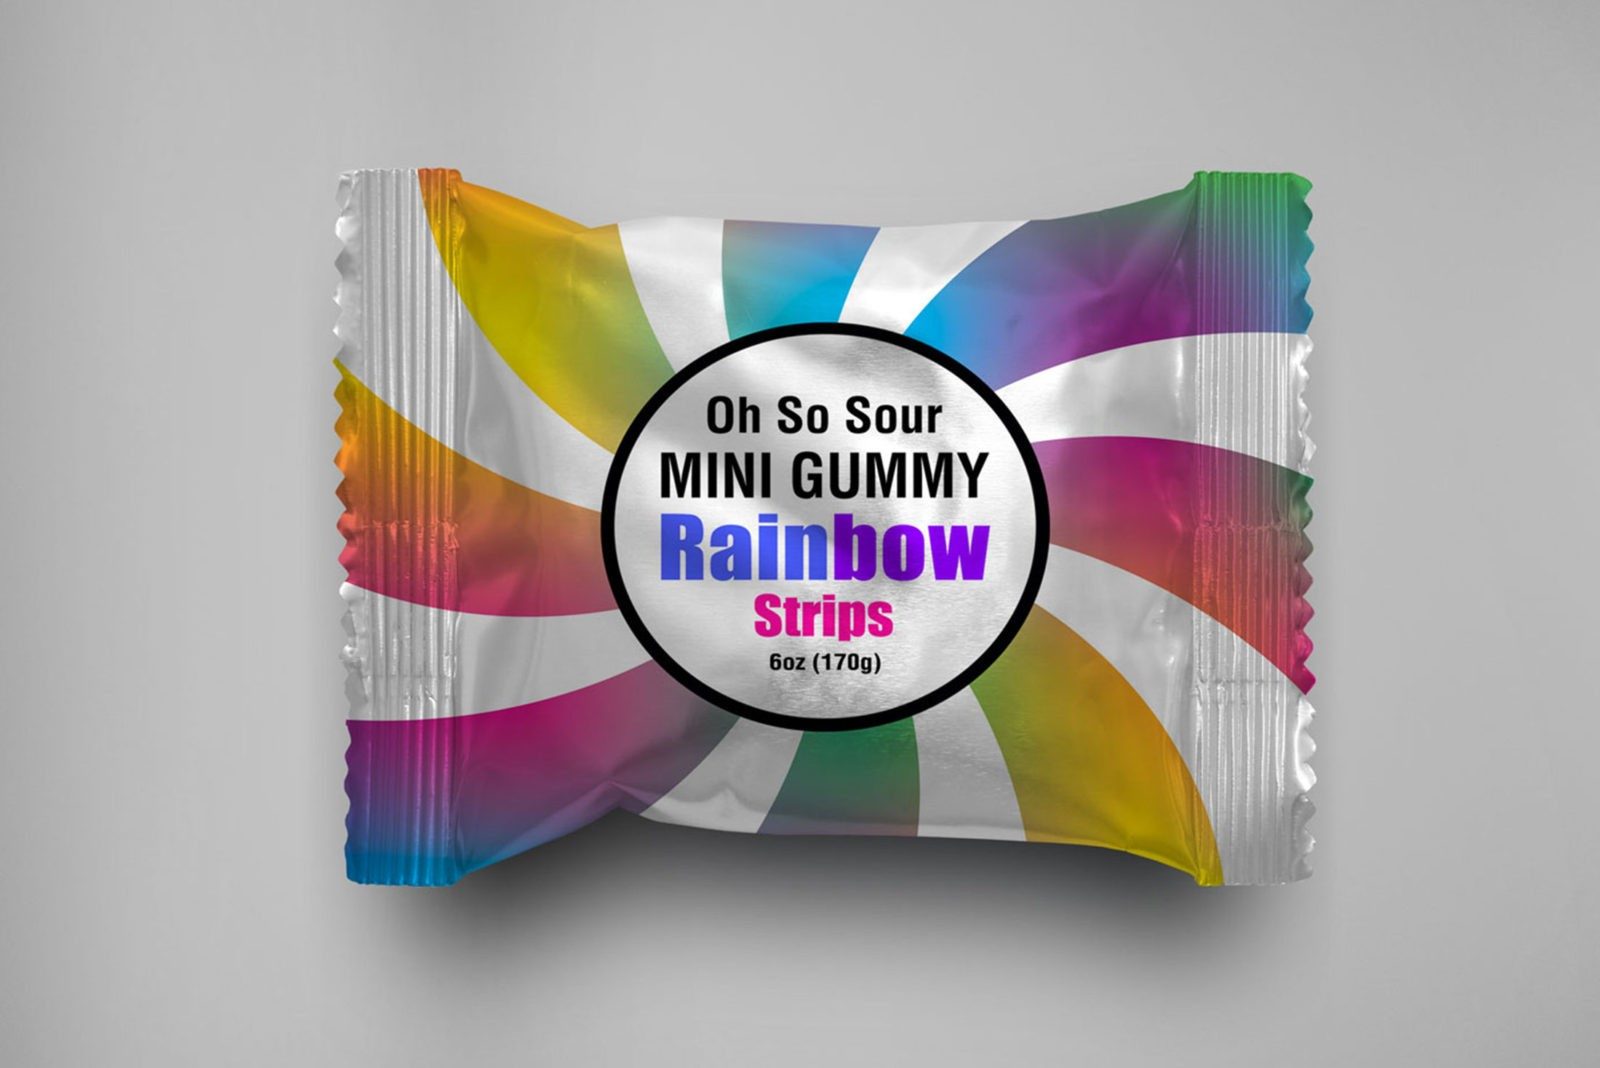 Packaging design, dizajn ambalaže Happy Gummy